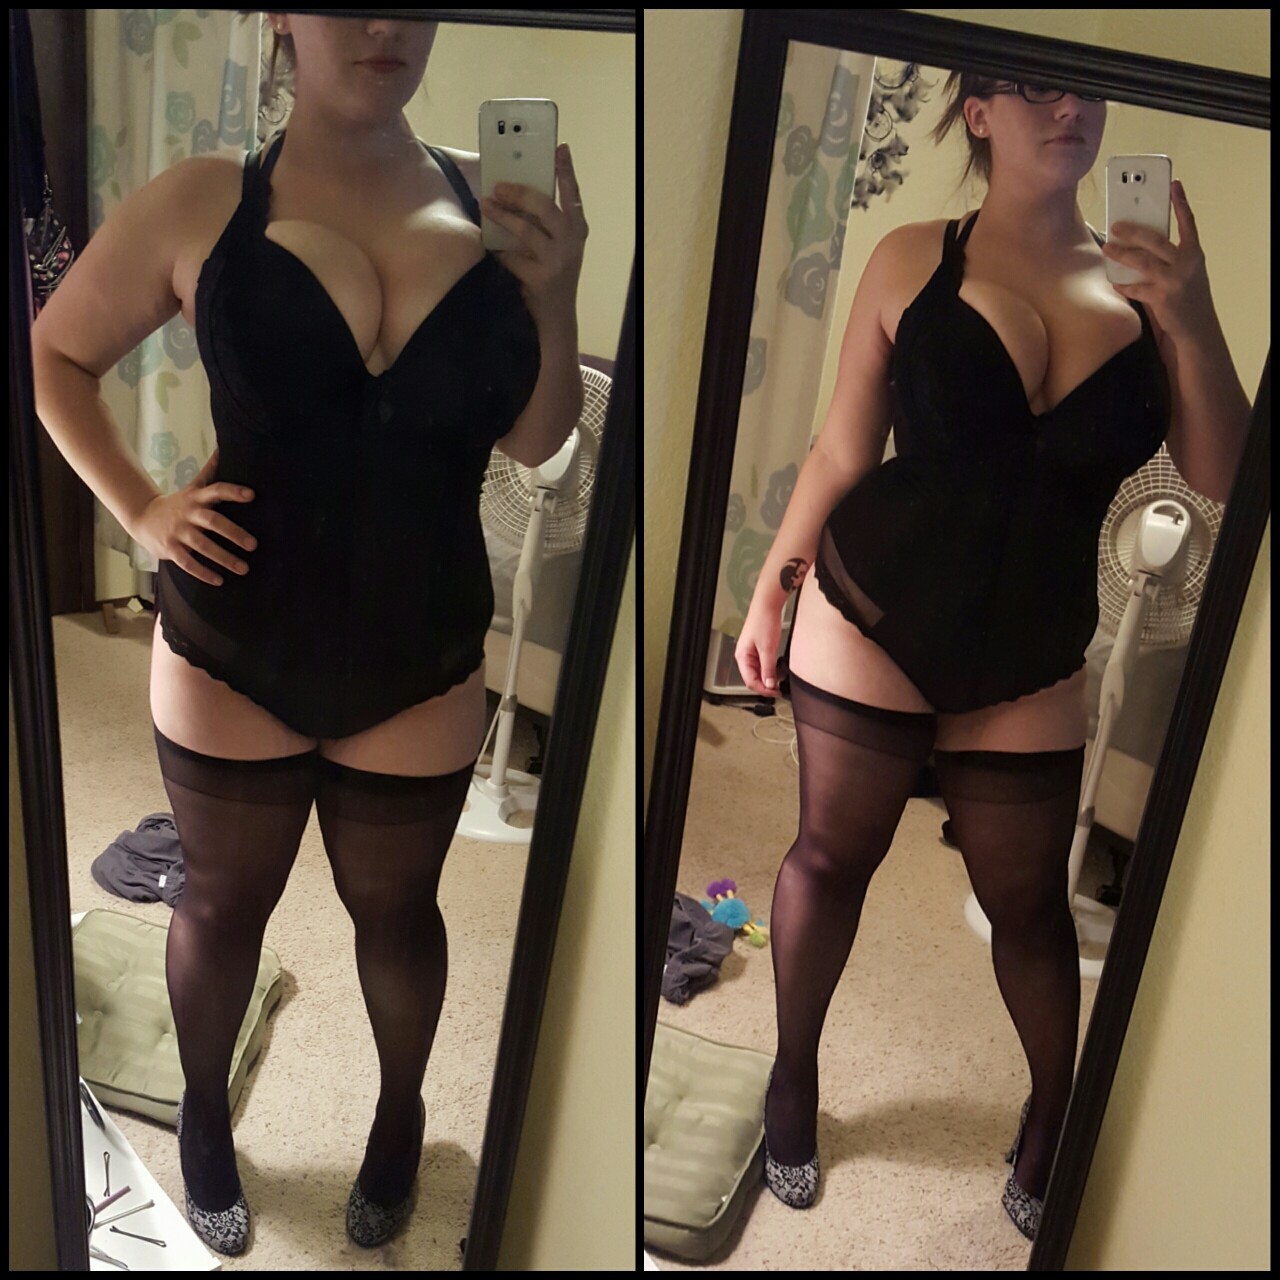 littlemissmelissa69:  I got some new lingerie thanks to a nice donation, decided